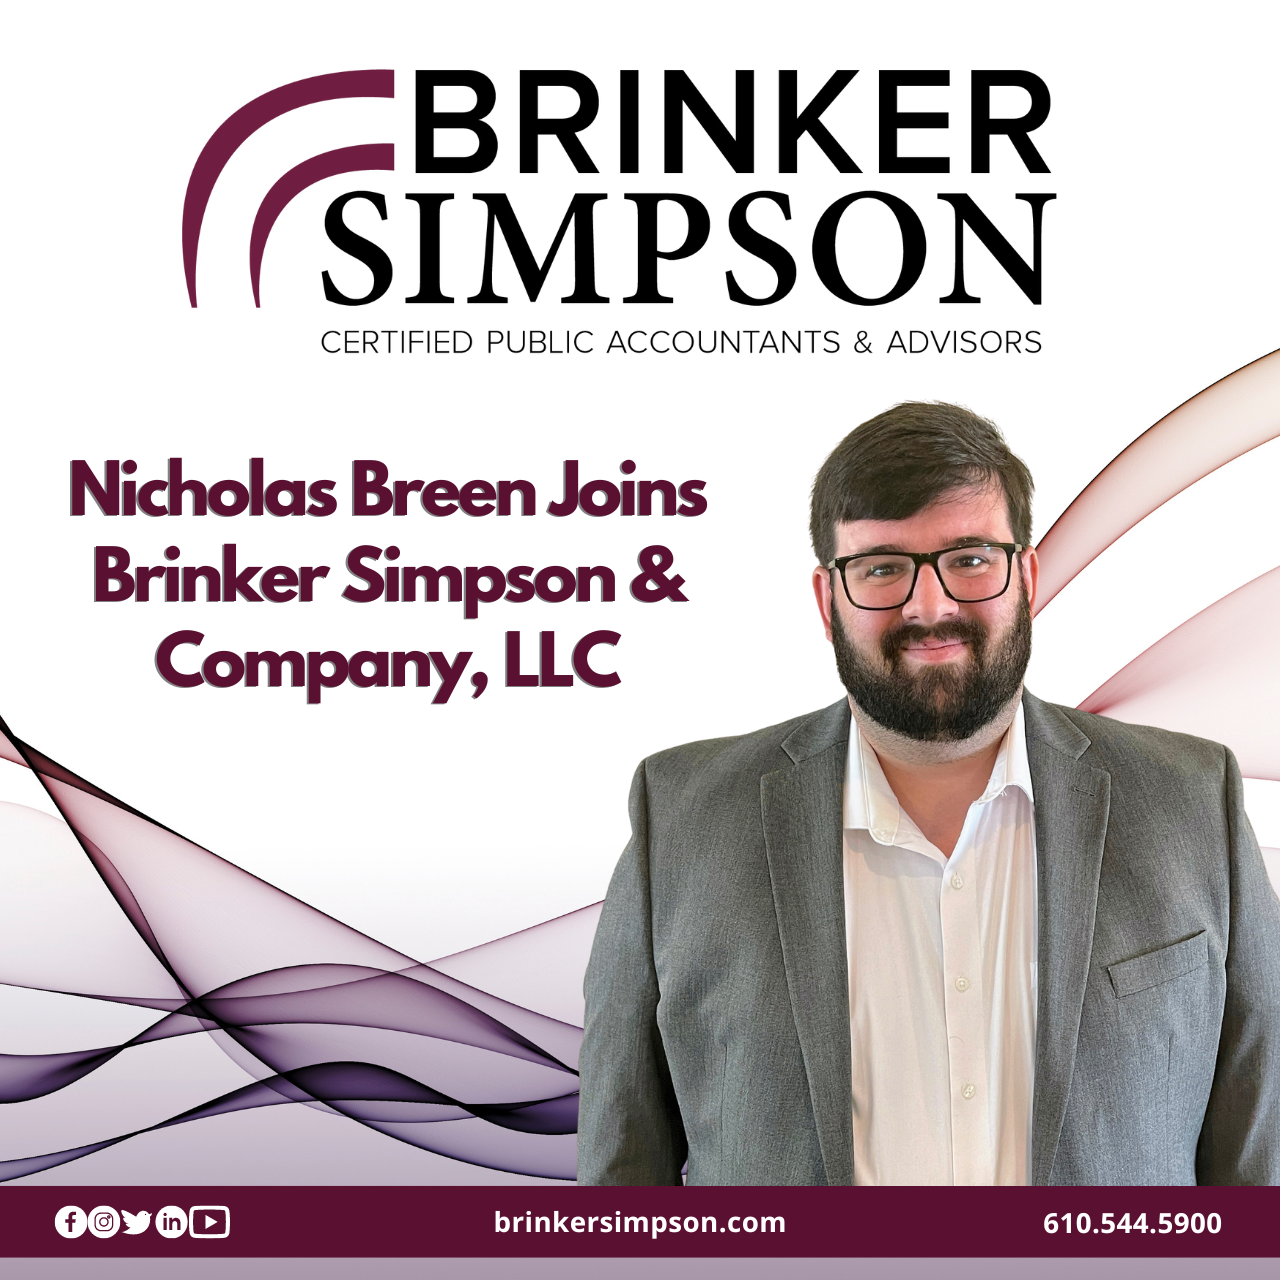 Nicholas Breen Joins Brinker Simpson & Company, LLC